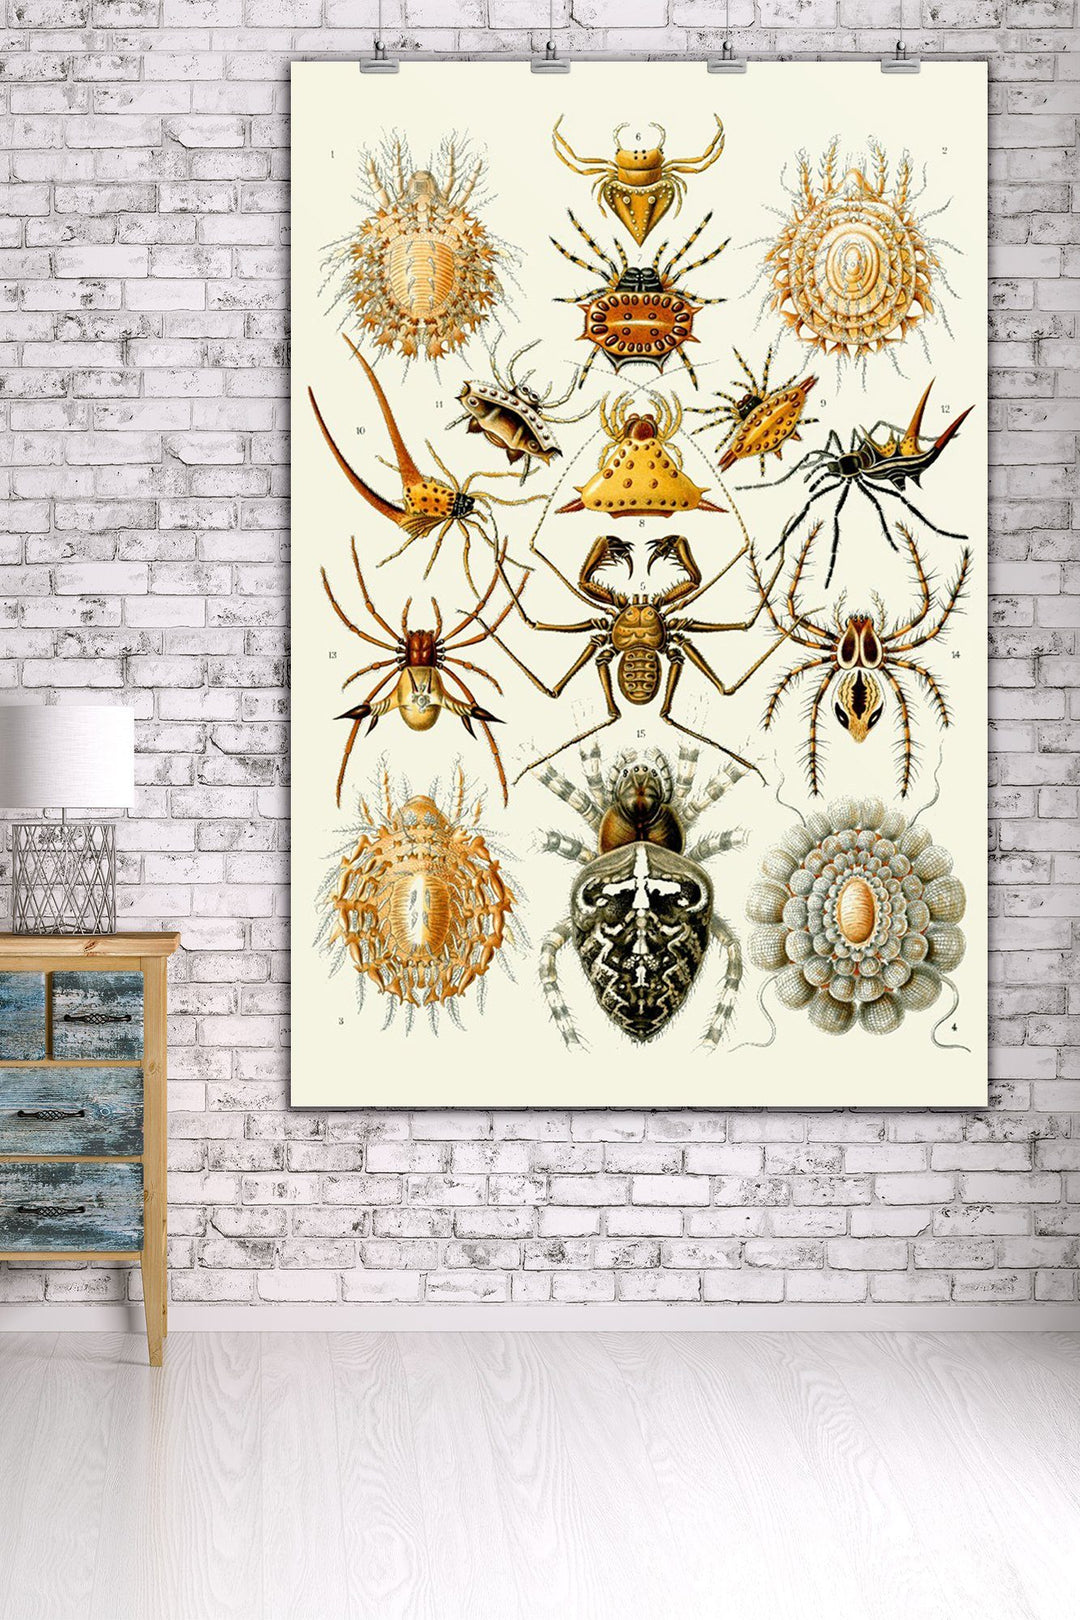 Art Forms of Nature, Arachnida (Spiders), Ernst Haeckel Artwork, Art Prints and Metal Signs Art Lantern Press 